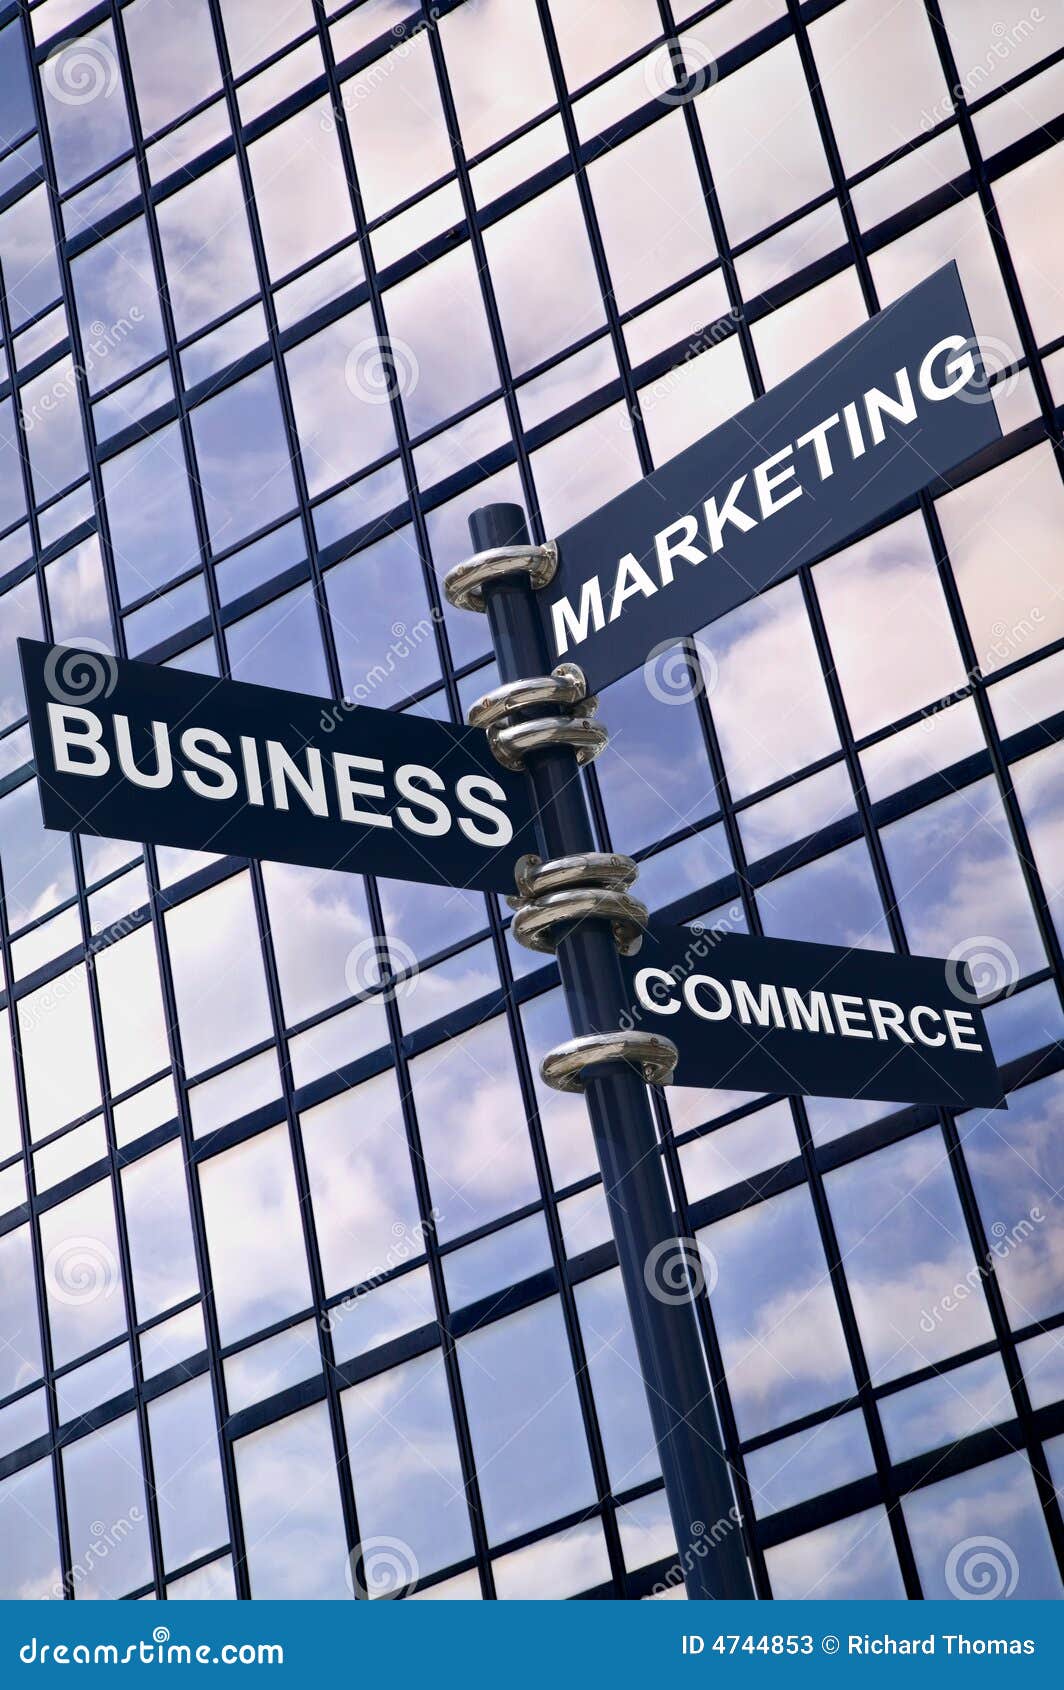 Business Marketing Commerce Sign Stock Photos - Image: 4744853